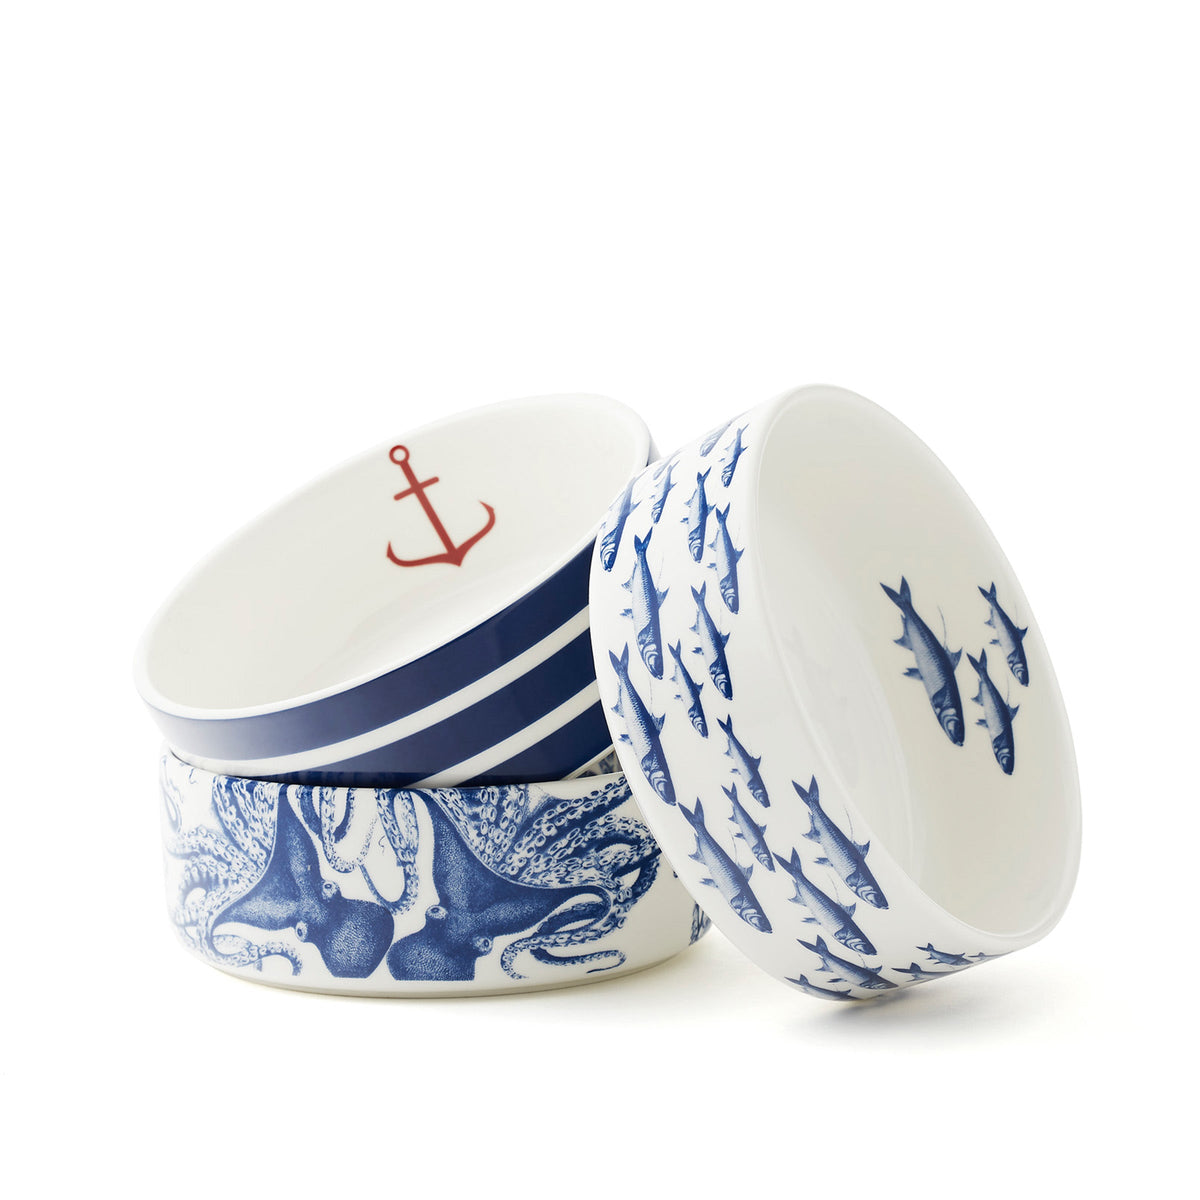 Coastal - School of Fish, Beach Towel Stripe and Lucy the Octopus medium pet bowls. Premium porcelain from Caskata.